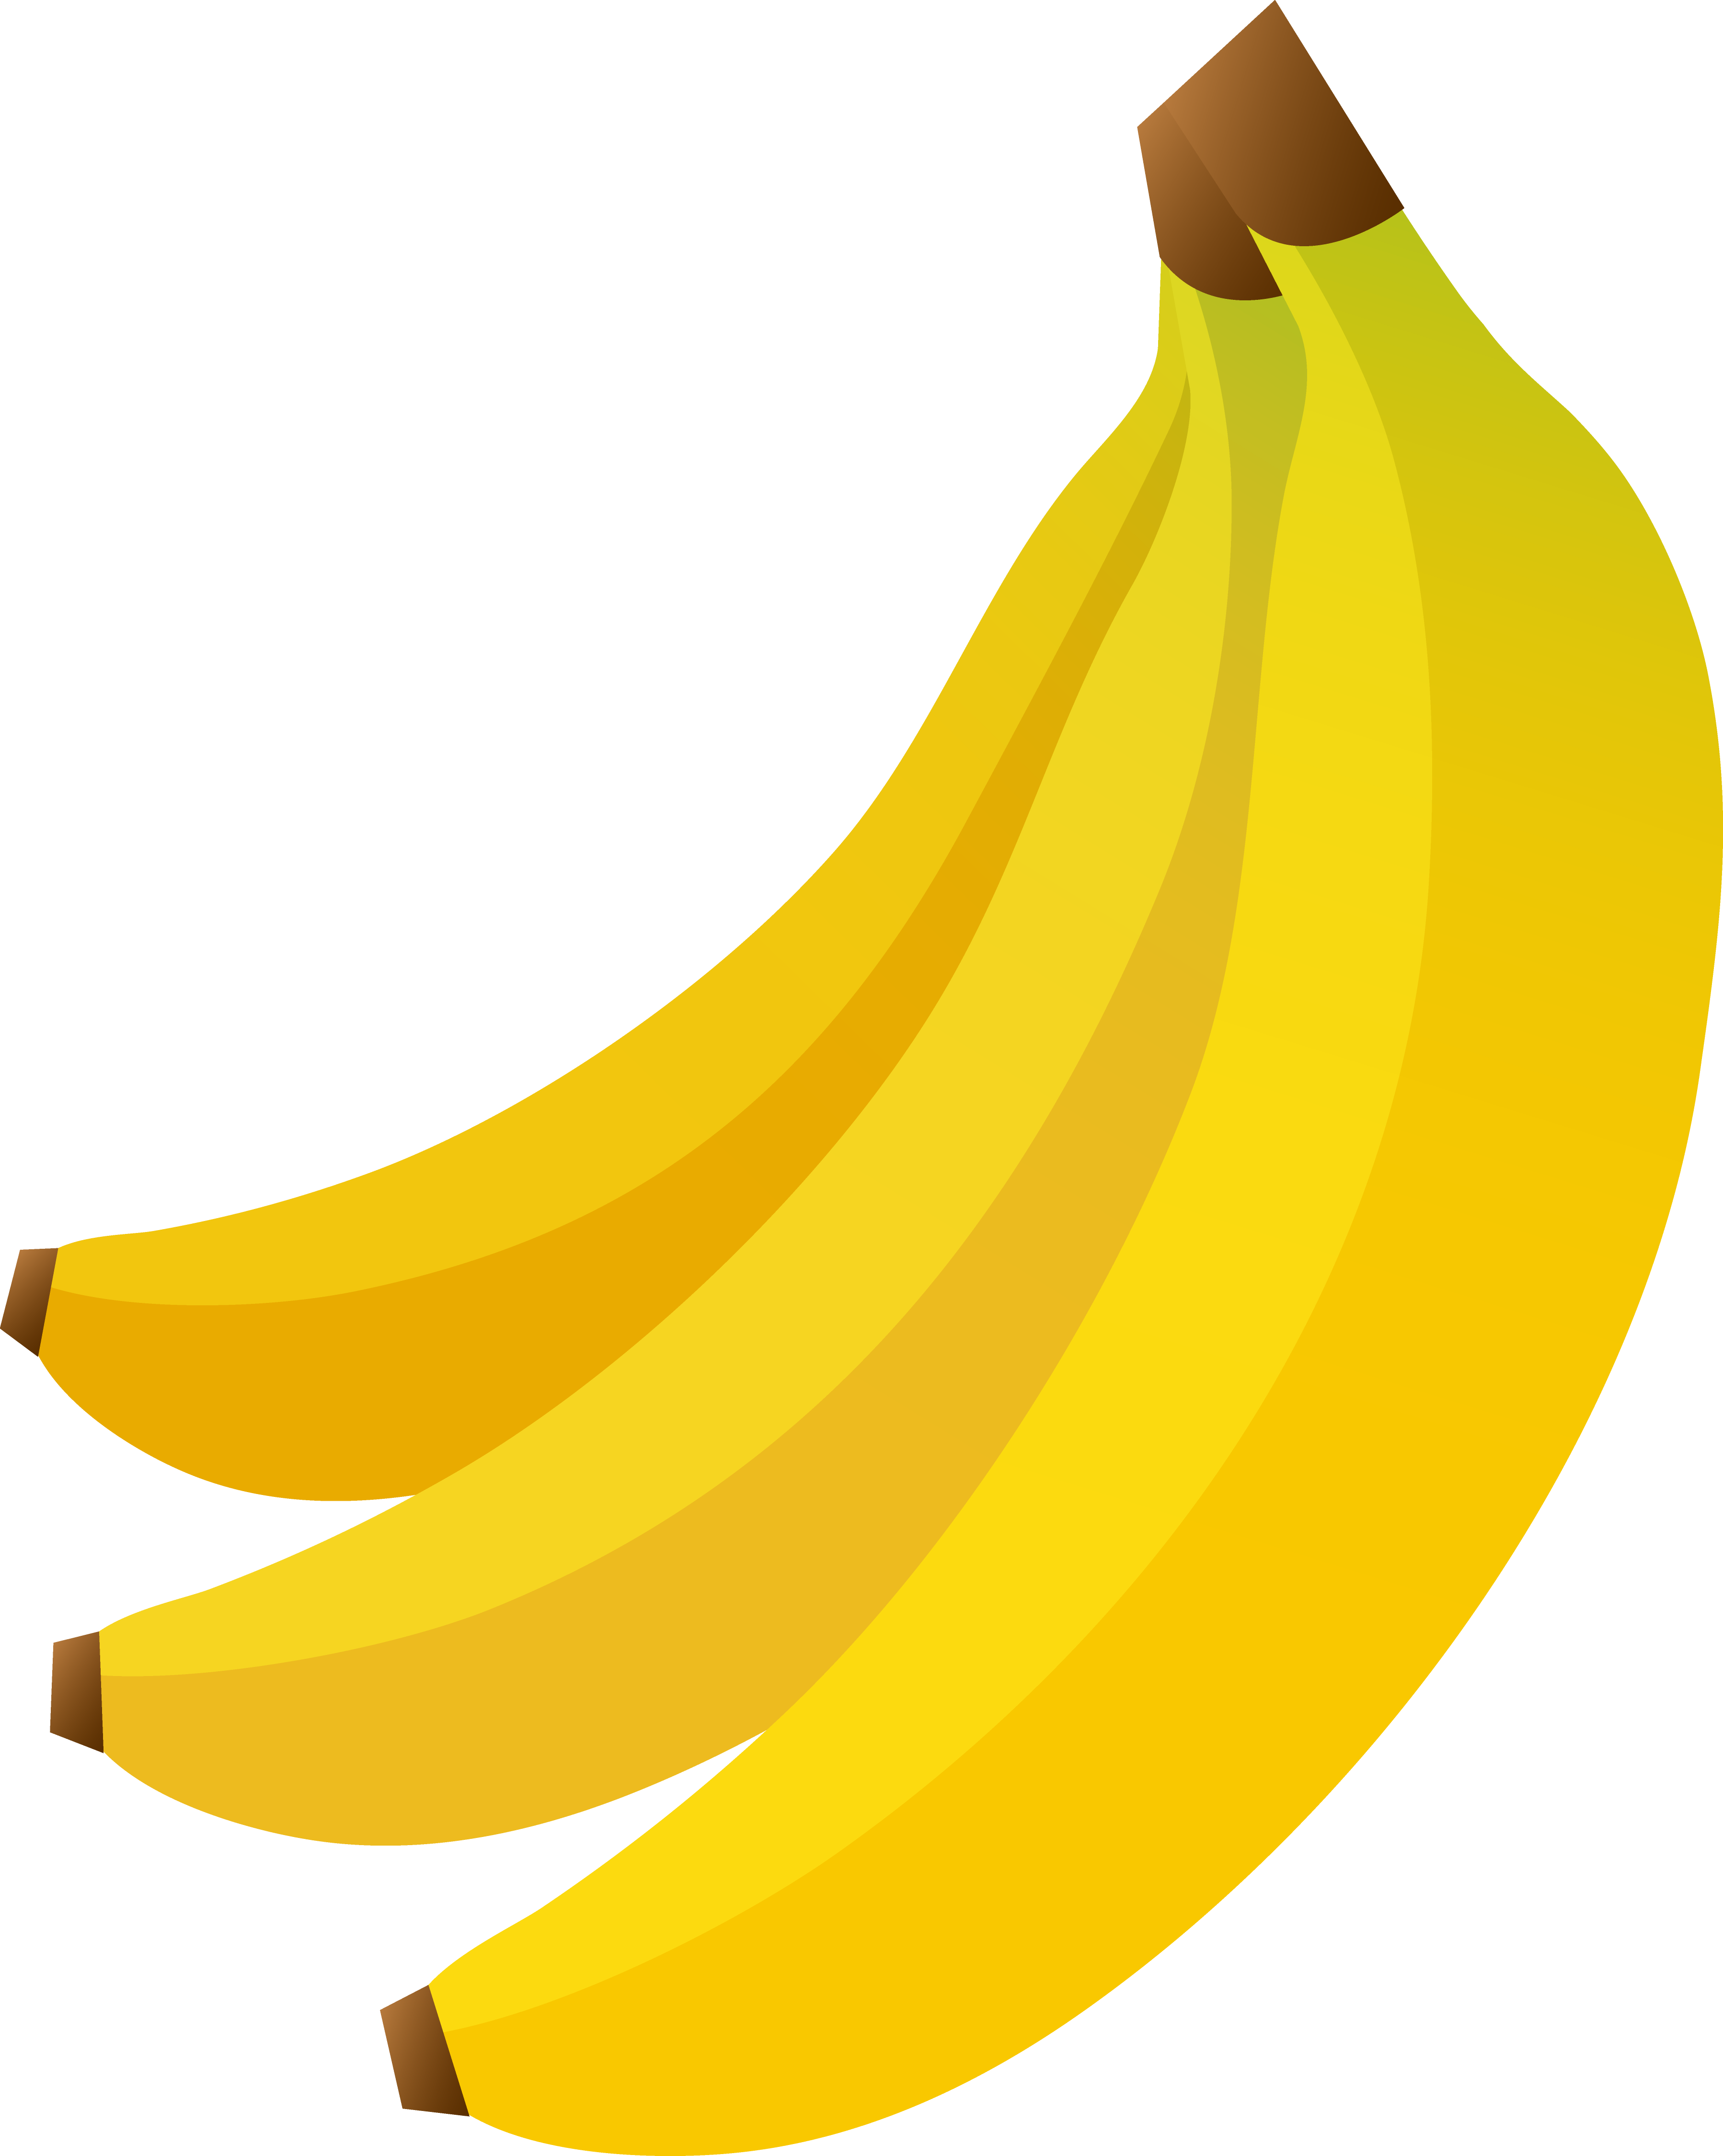 Bananas clip art free clipart